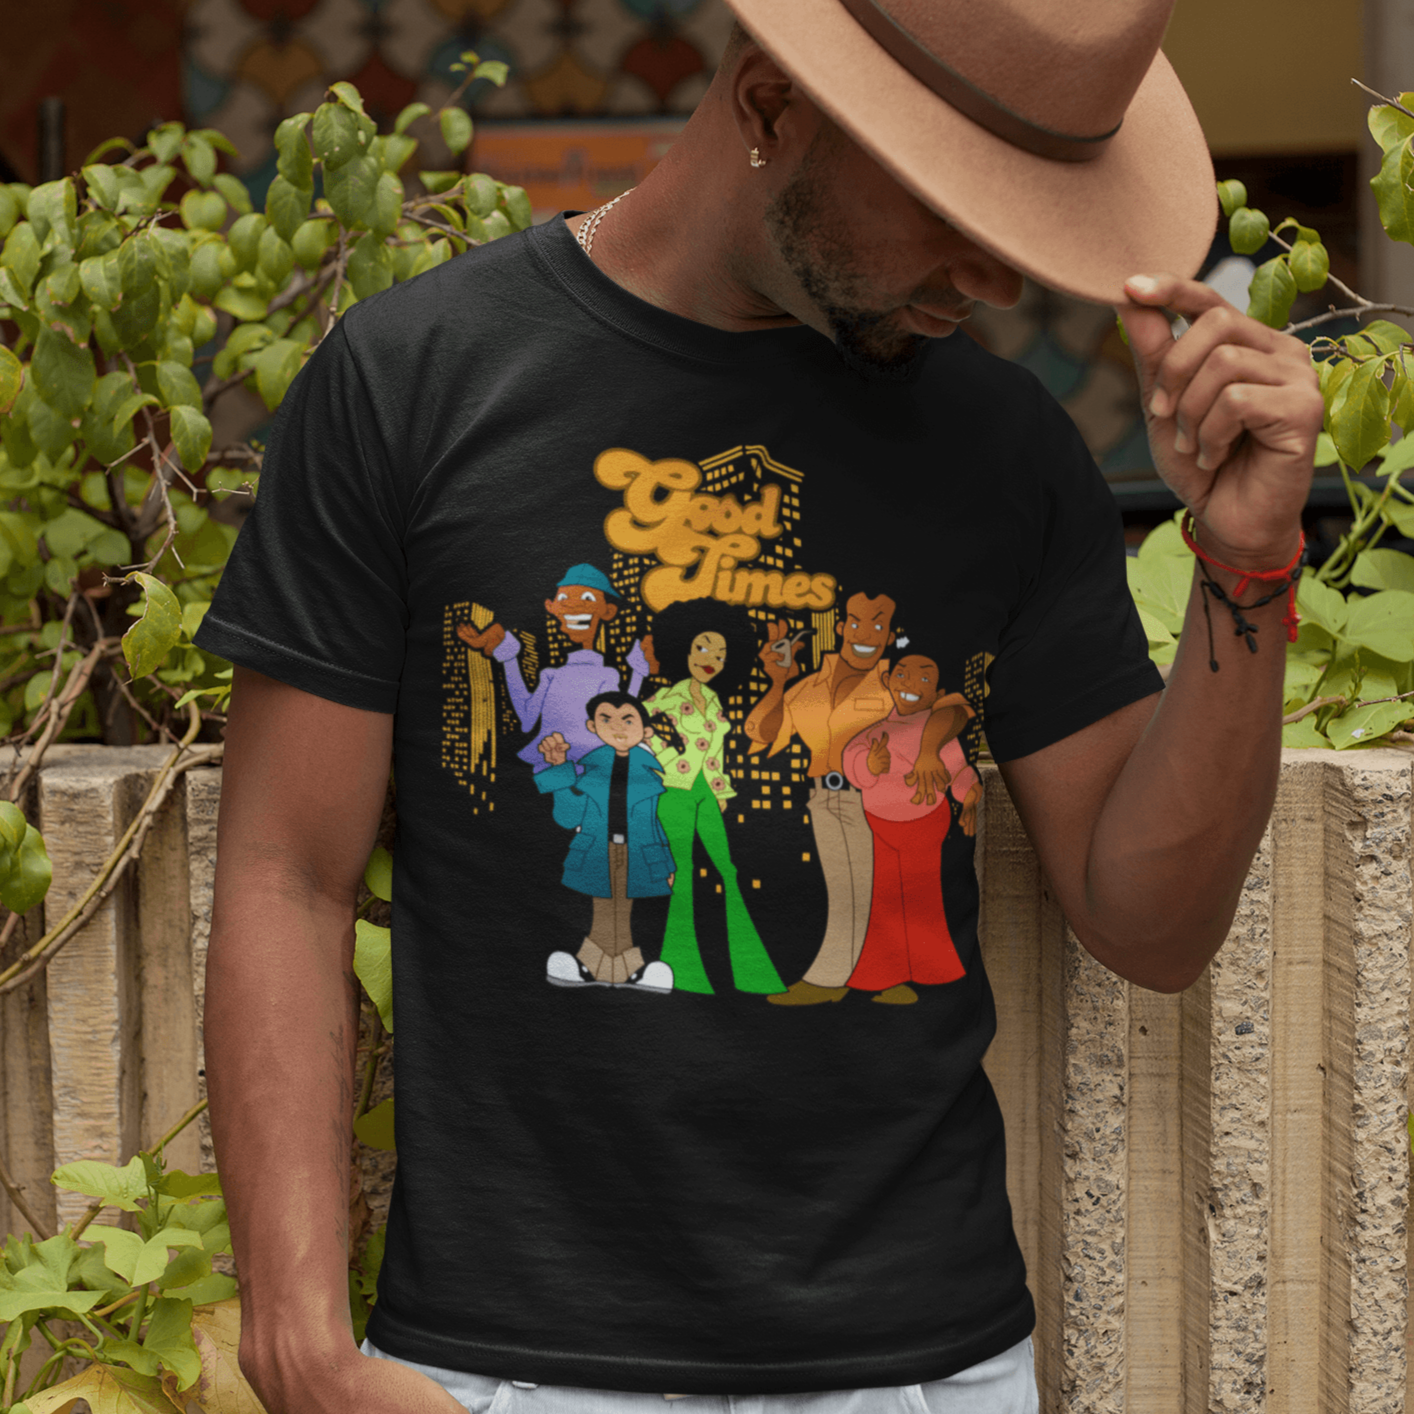 Good Times T-shirt 70's TV Sitcom Animated Retro Style of Cast Members Short Sleeve Unisex t-shirt - TopKoalaTee